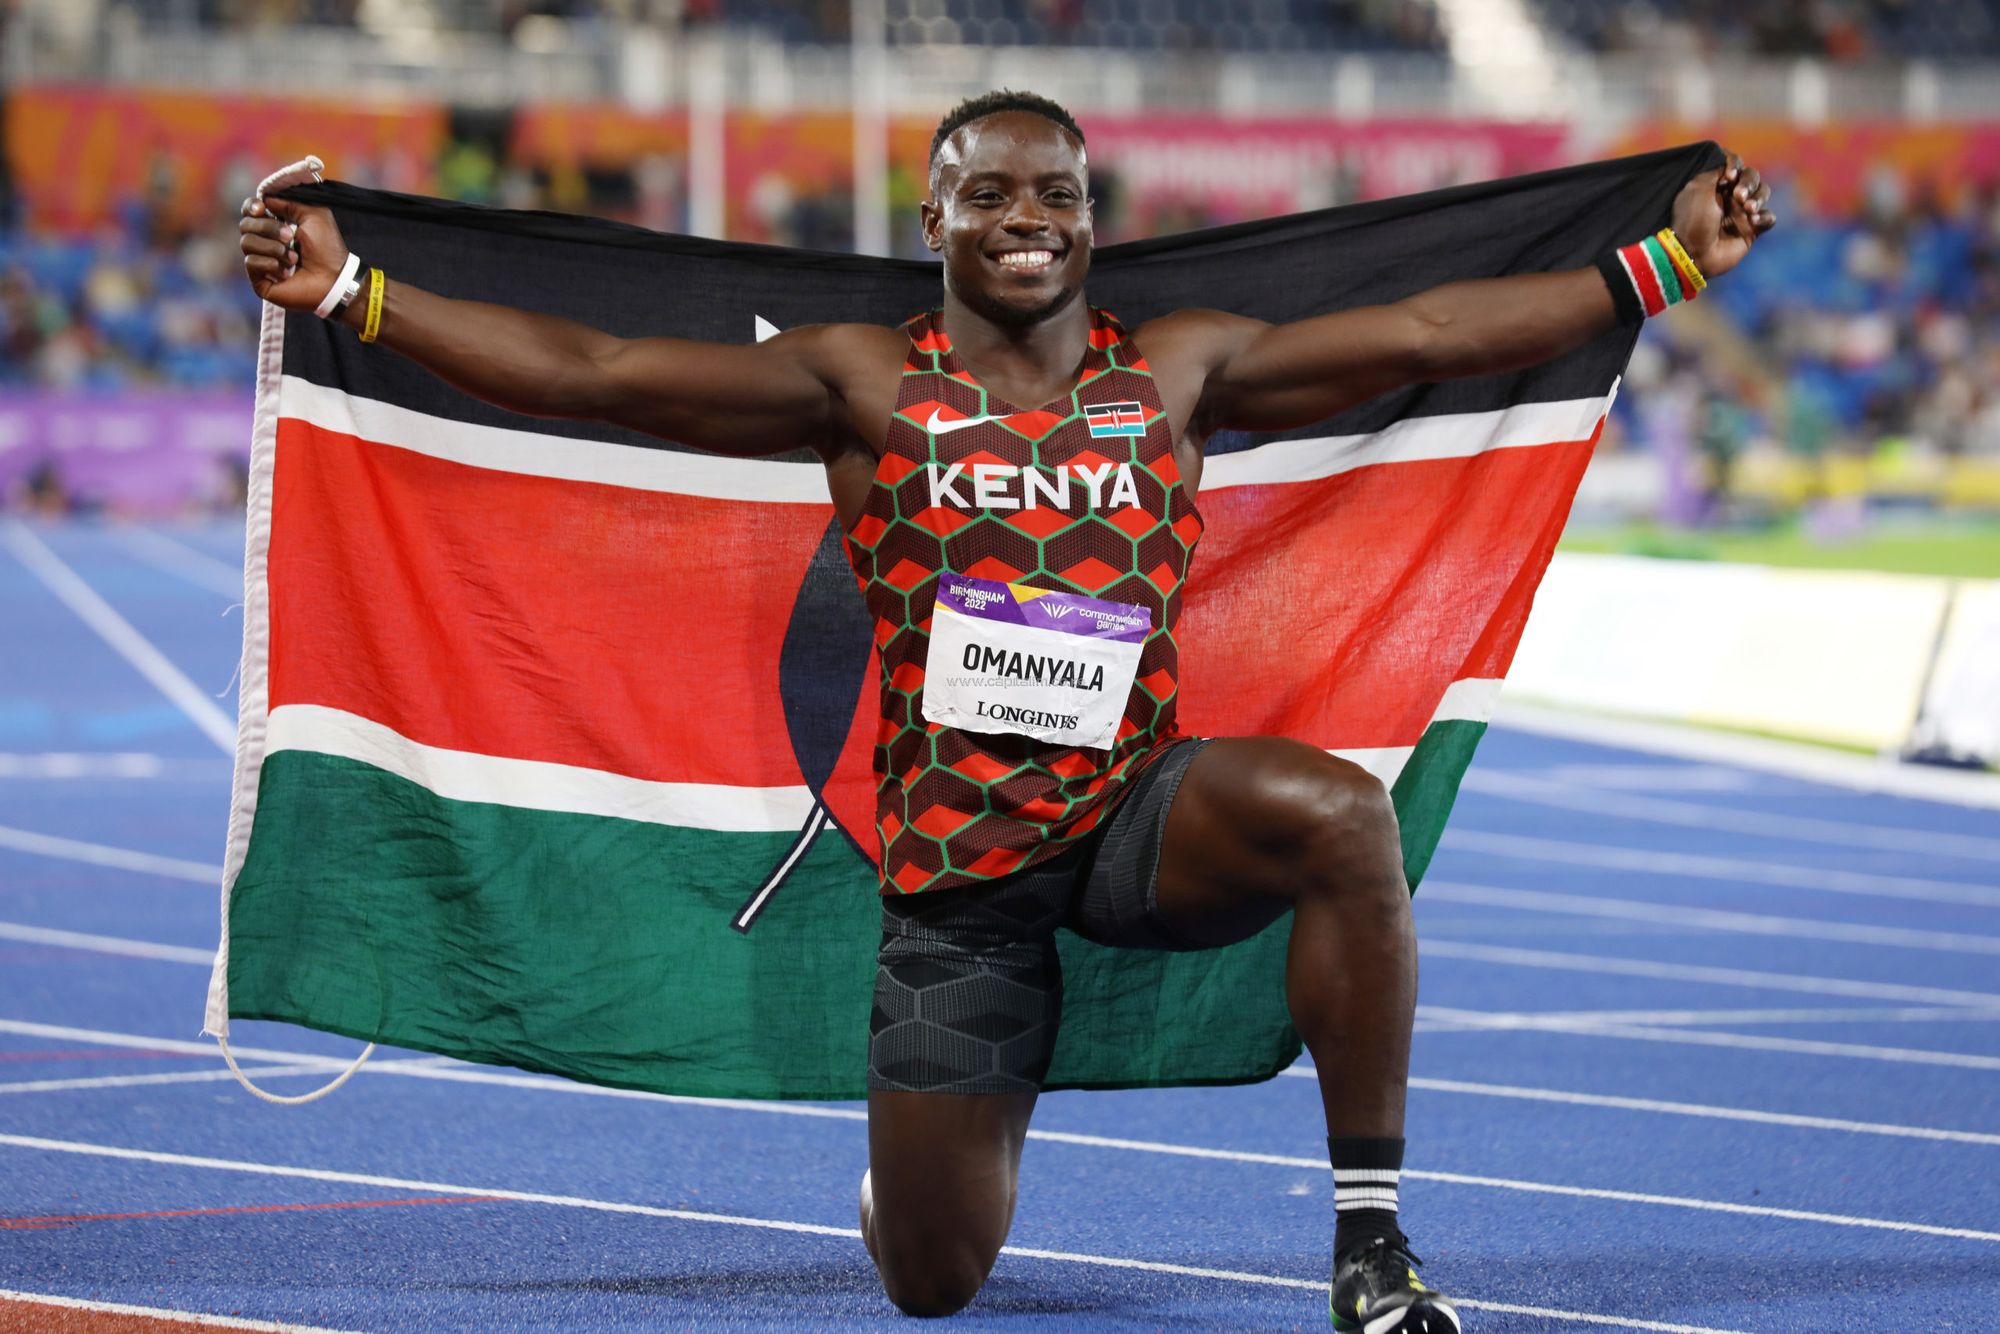 Kenyan Athlete Ferdinand Omanyala Wins The Men's 100m Title In